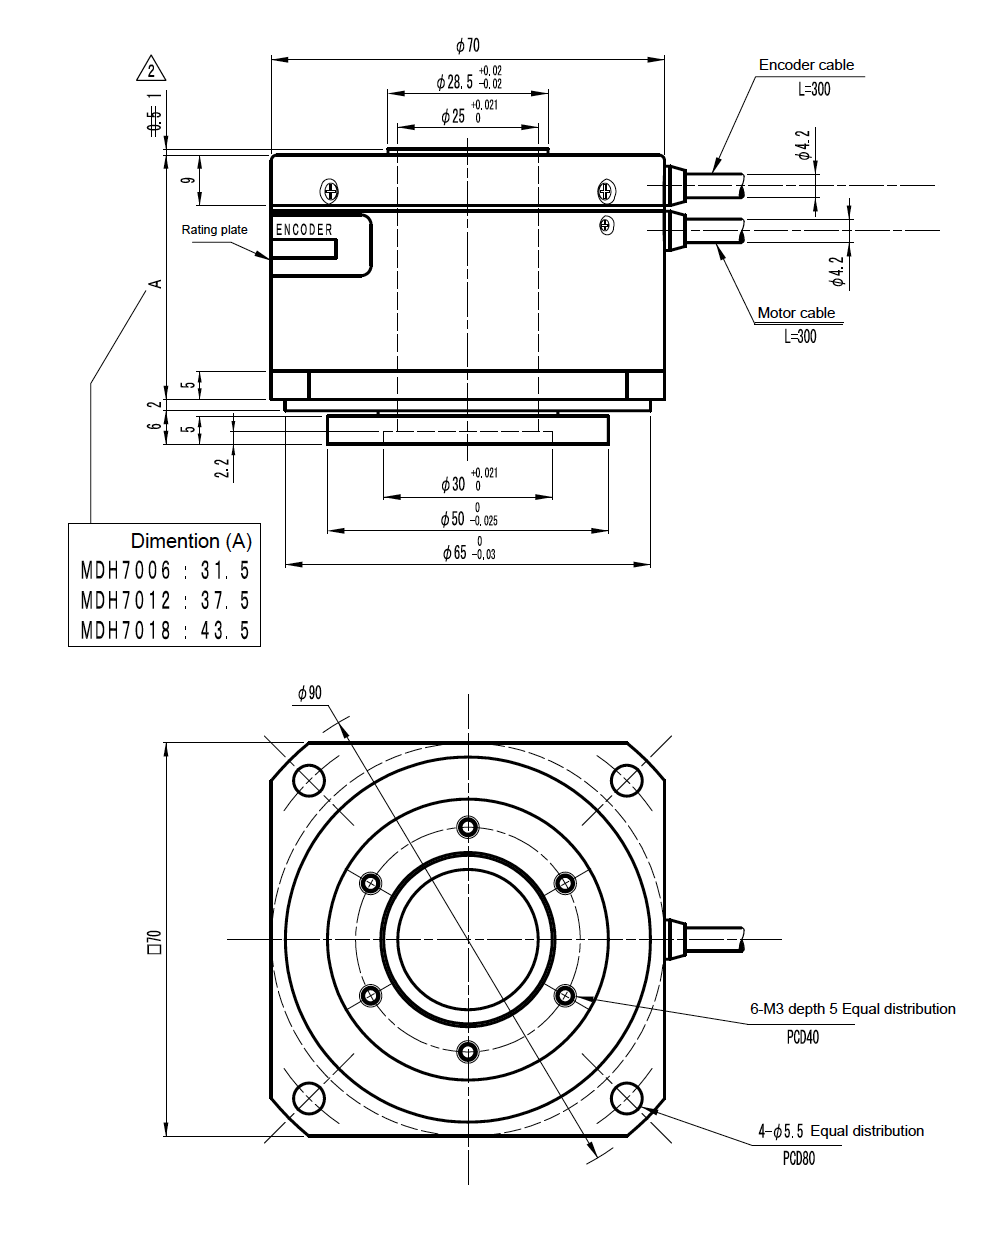 MDH-7018 system drawing